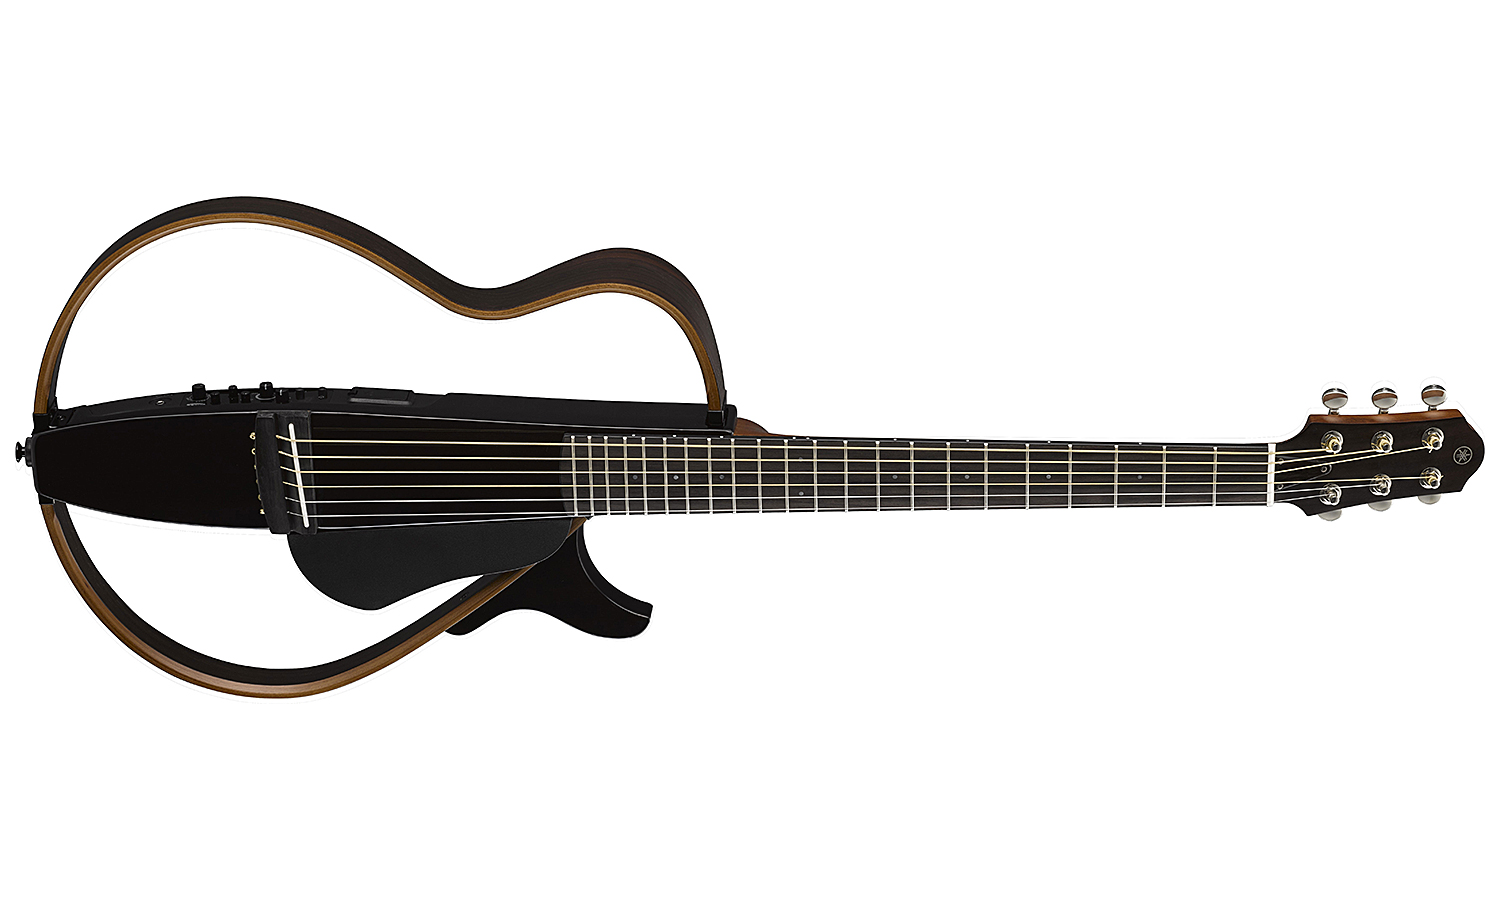 Yamaha Silent Guitar Slg200s - Translucent Black - Elektroakustische Gitarre - Variation 1